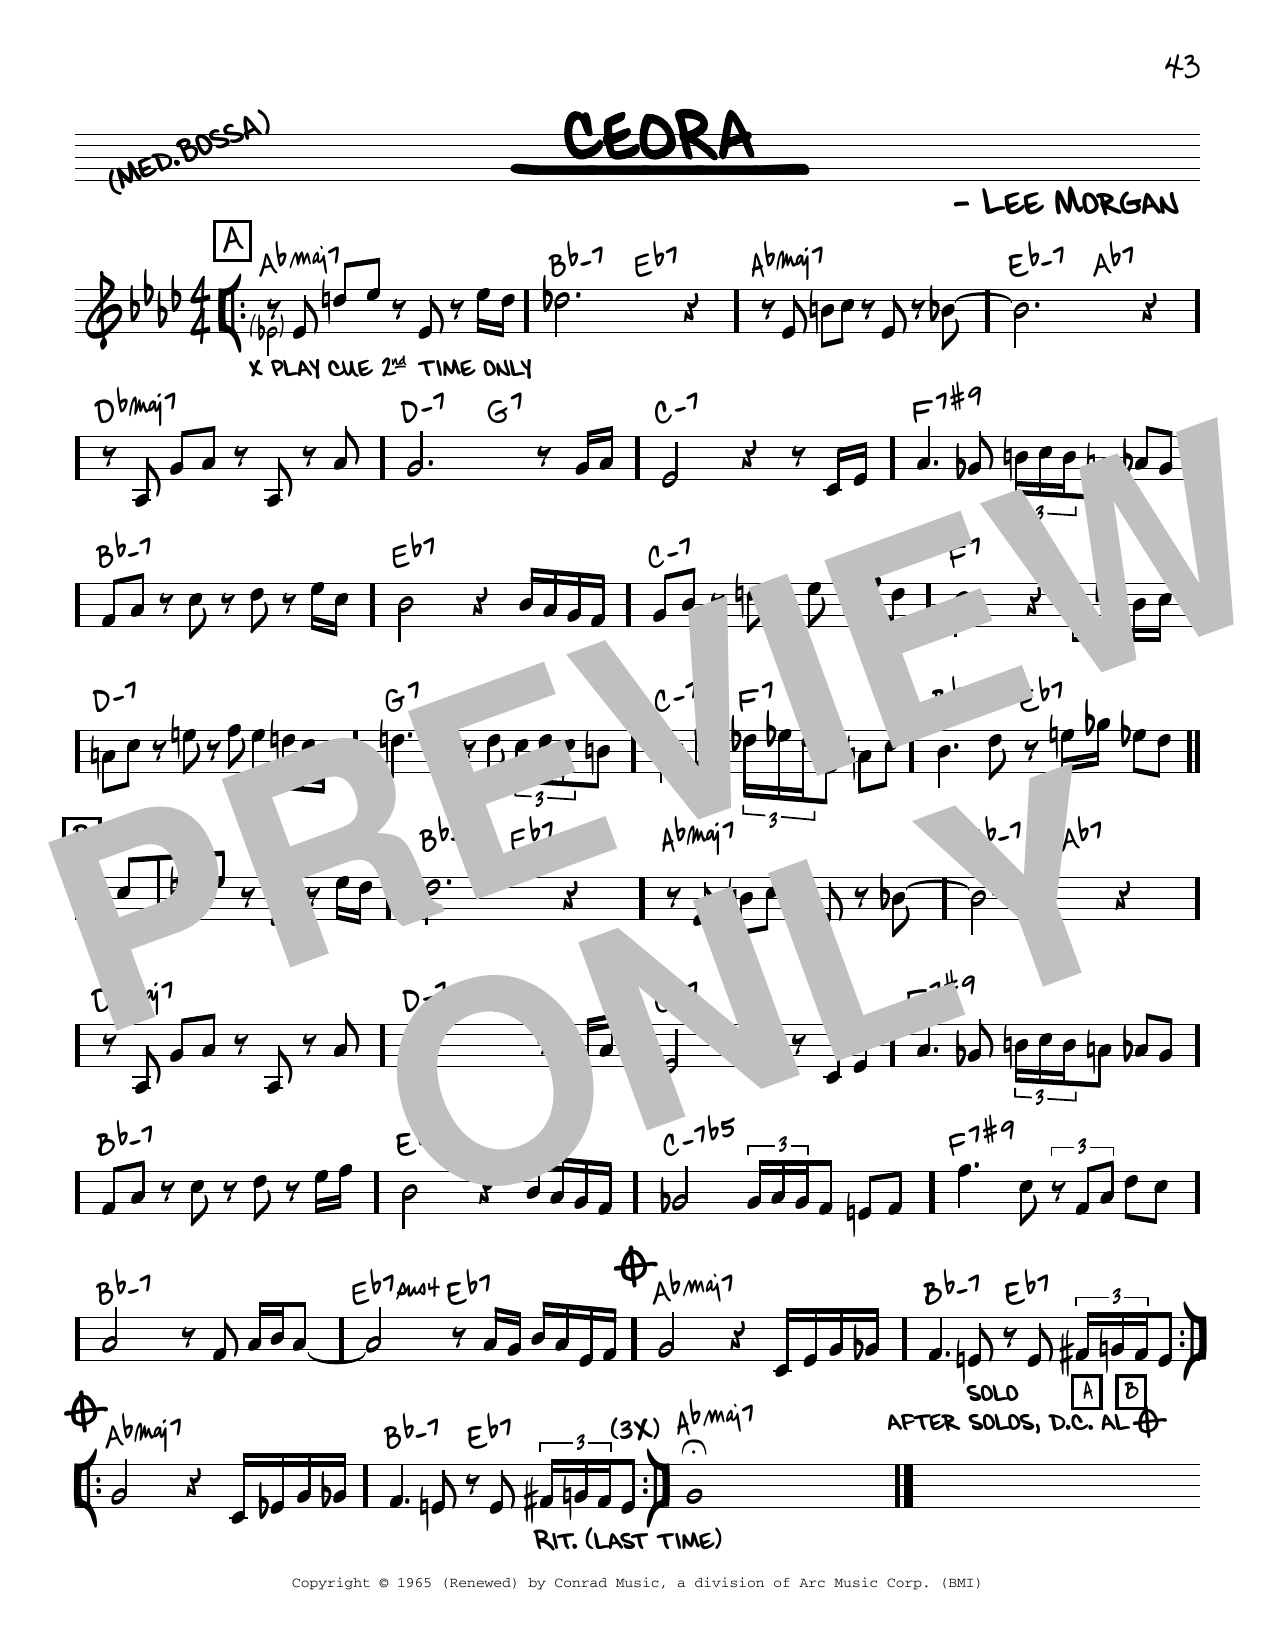 Lee Morgan Ceora Sheet Music Notes & Chords for Trumpet Transcription - Download or Print PDF